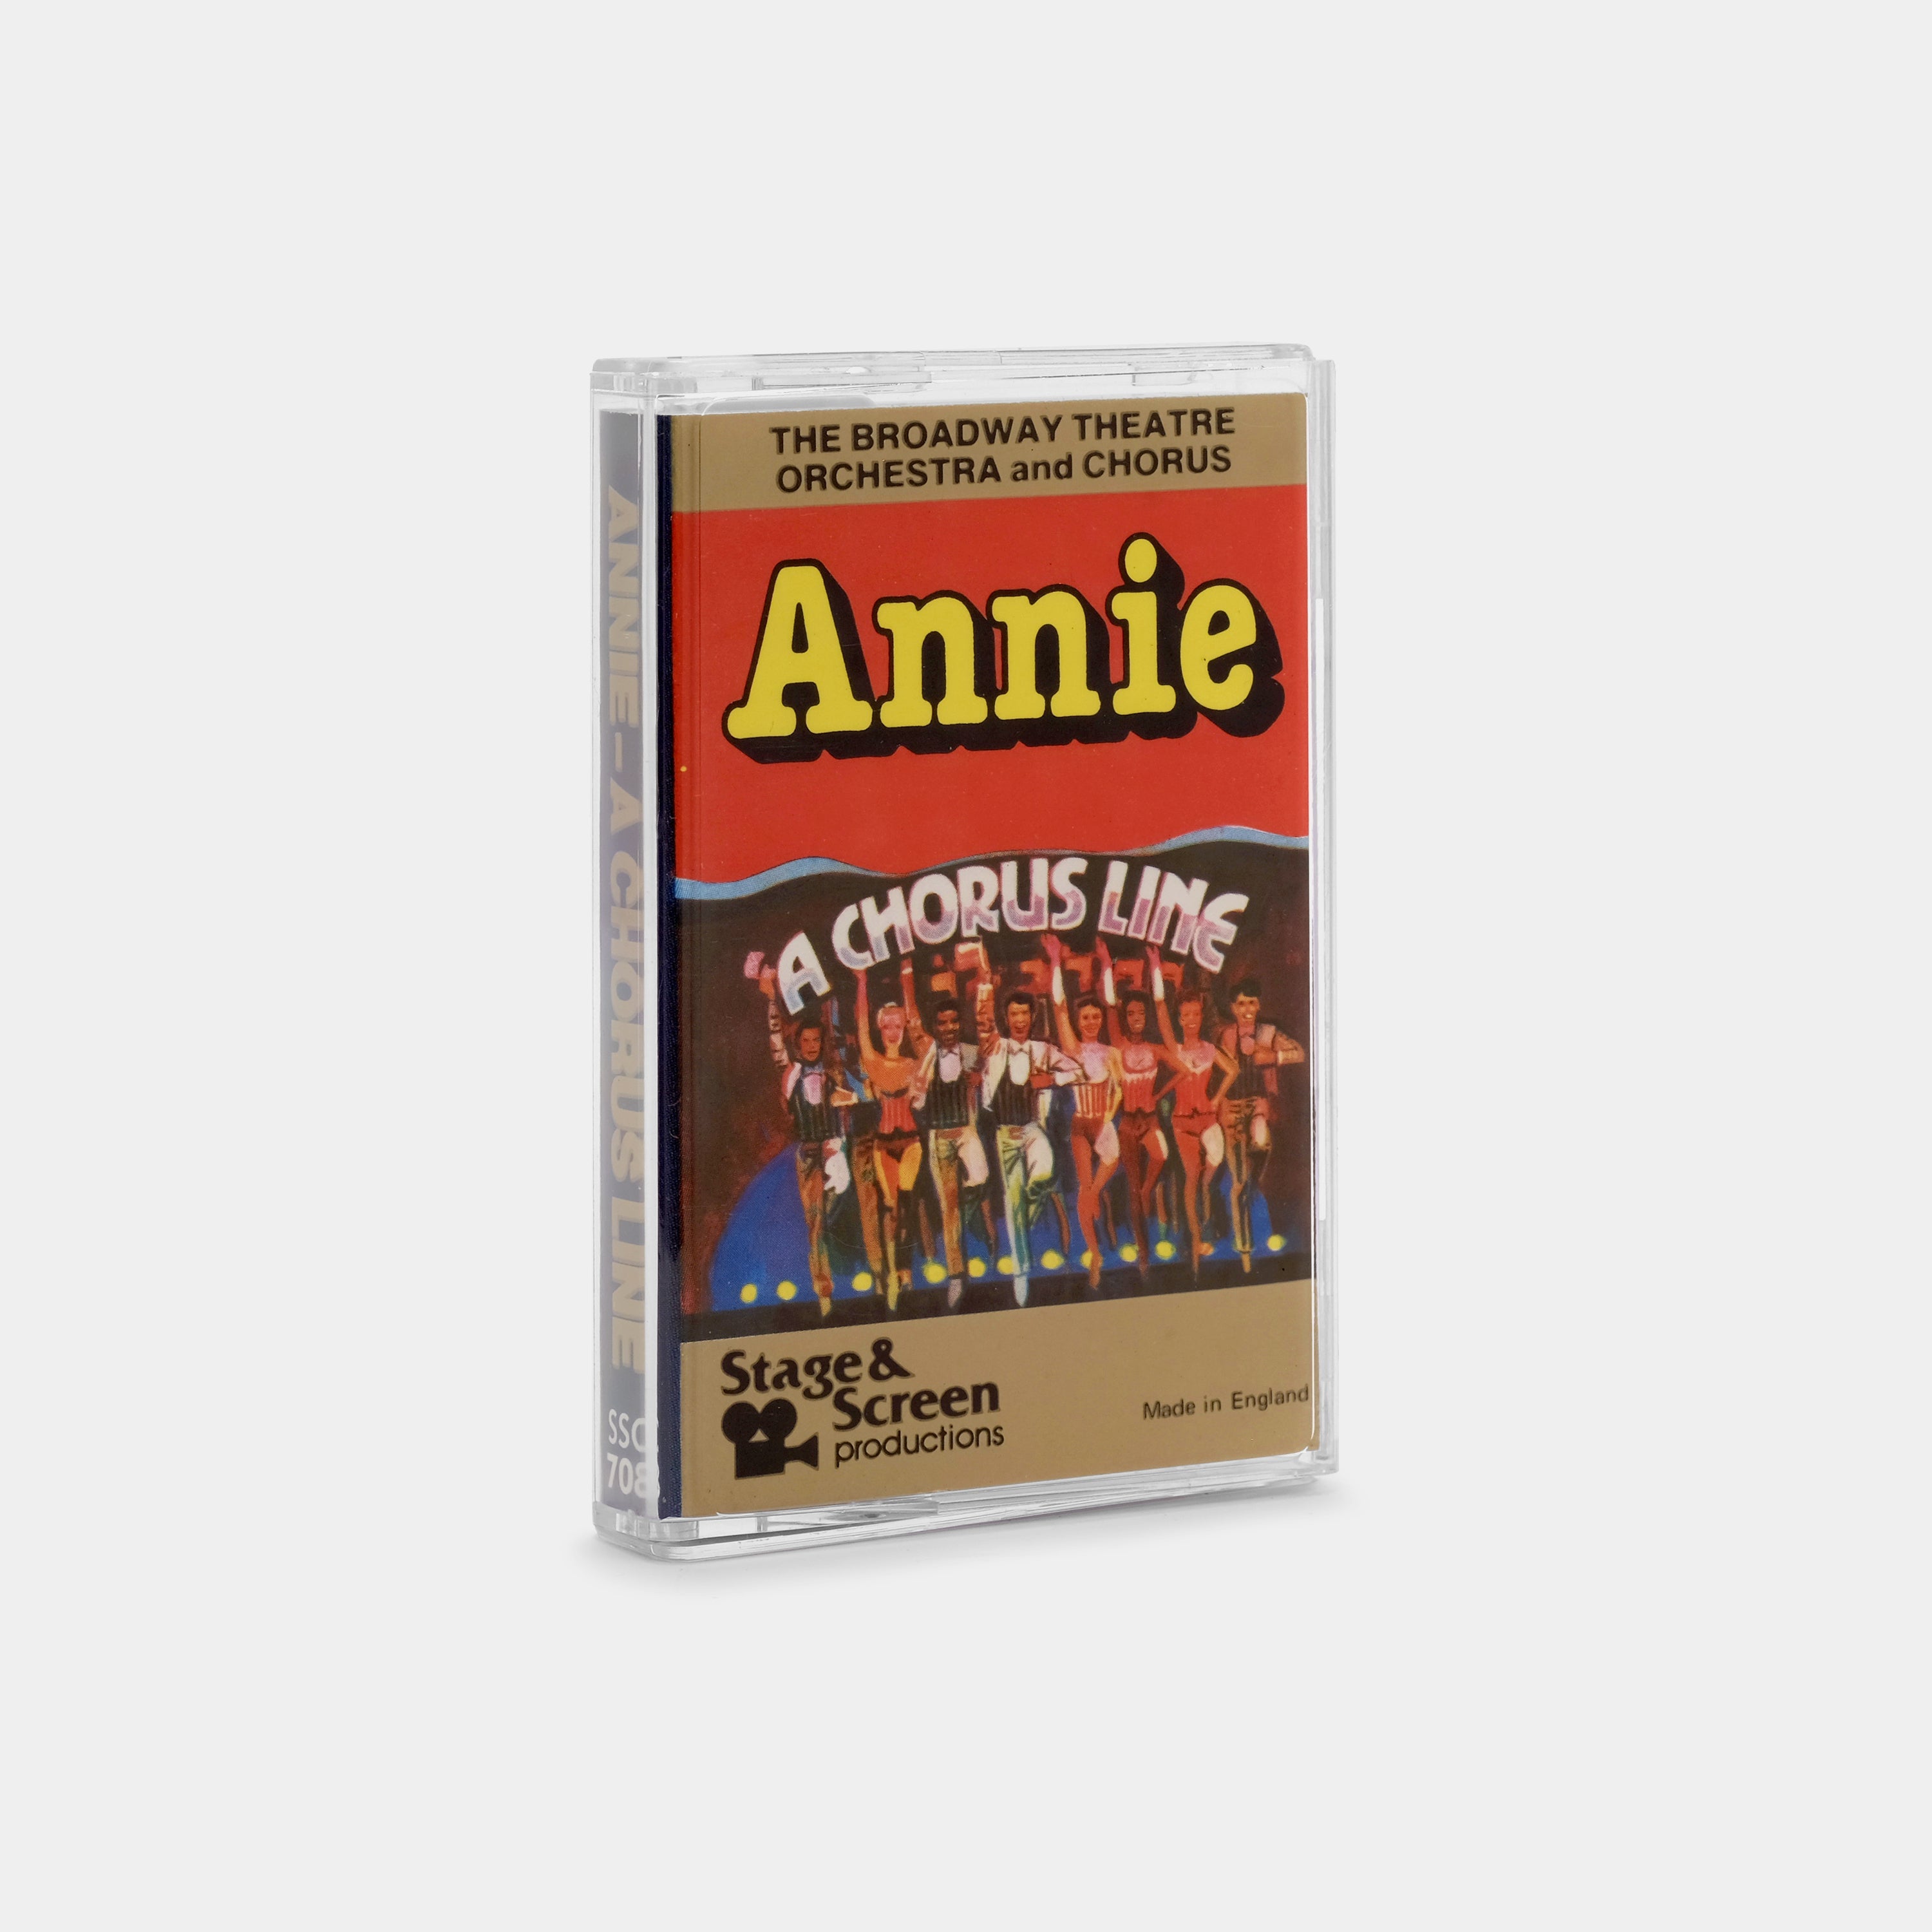 The Broadway Theatre & Orchestra - Annie - A Chorus Line Cassette Tape